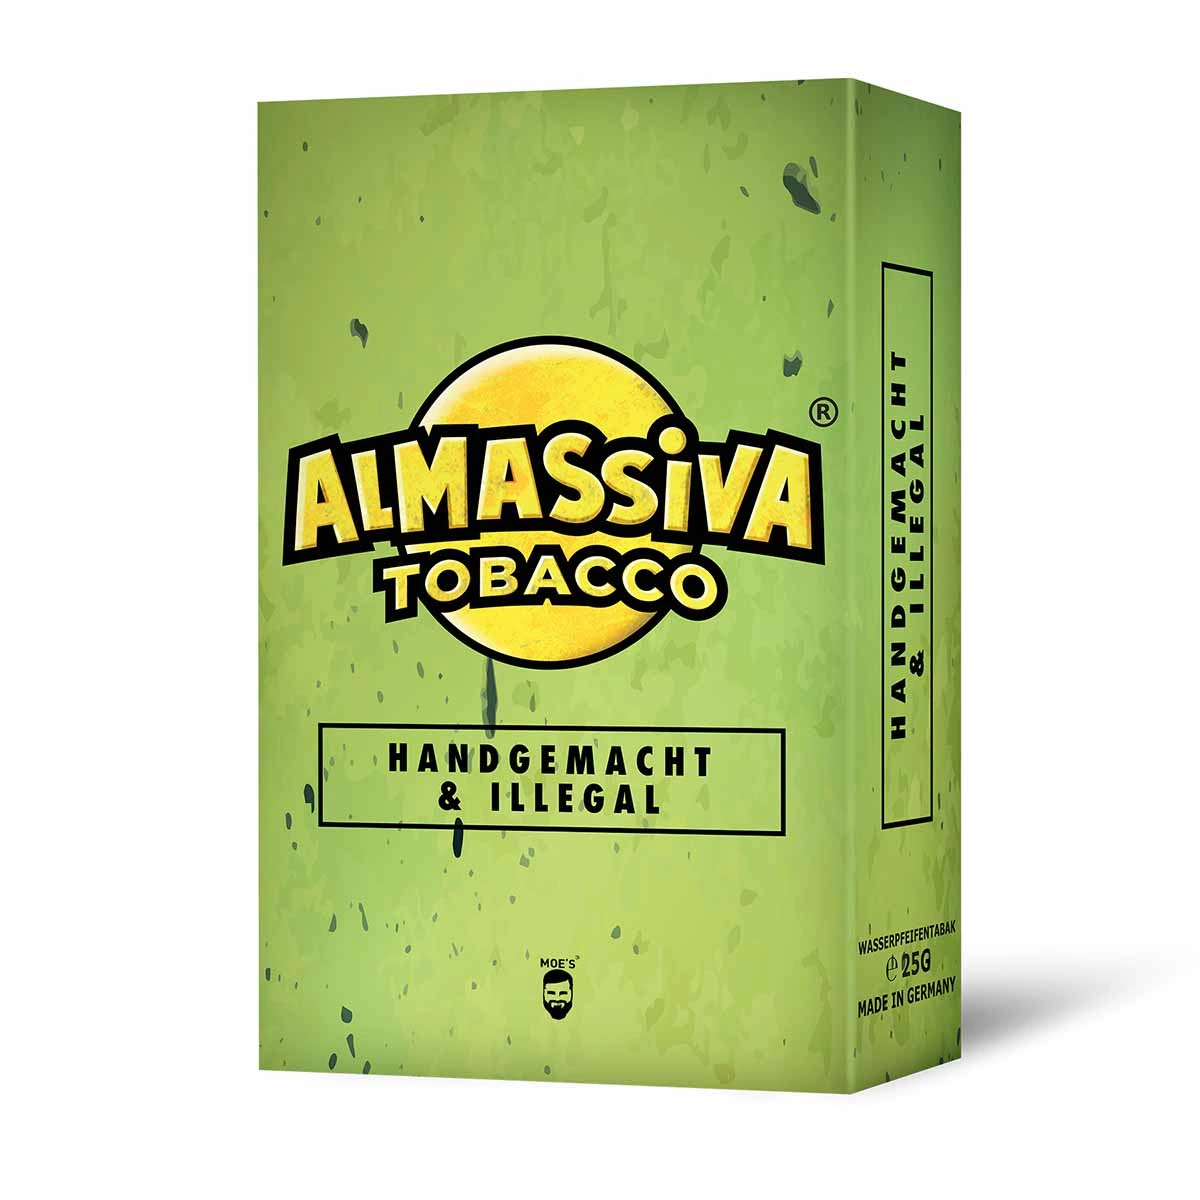 Al Massiva Tobacco 25g Handgemacht & Illegal